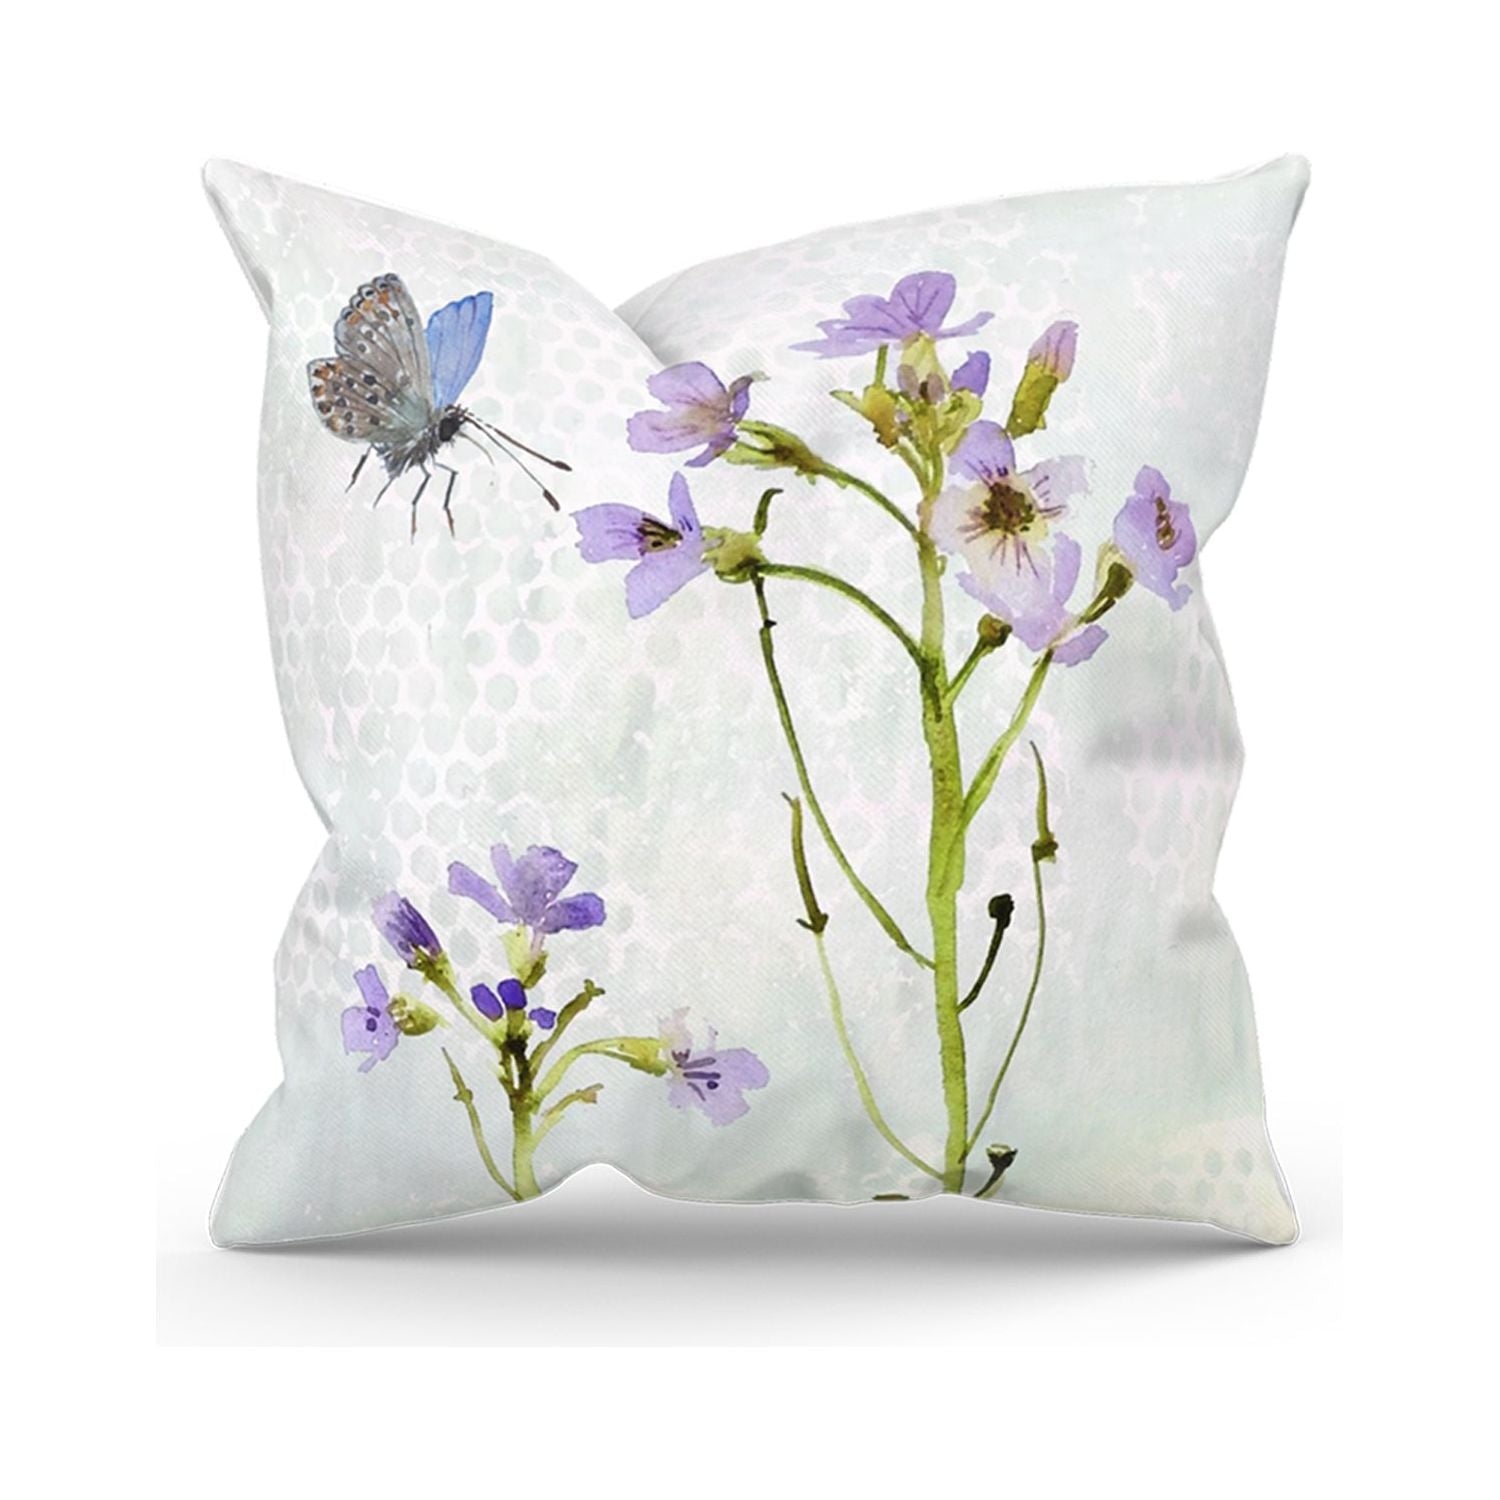 'Lady's Smock' Wildflower Cushion